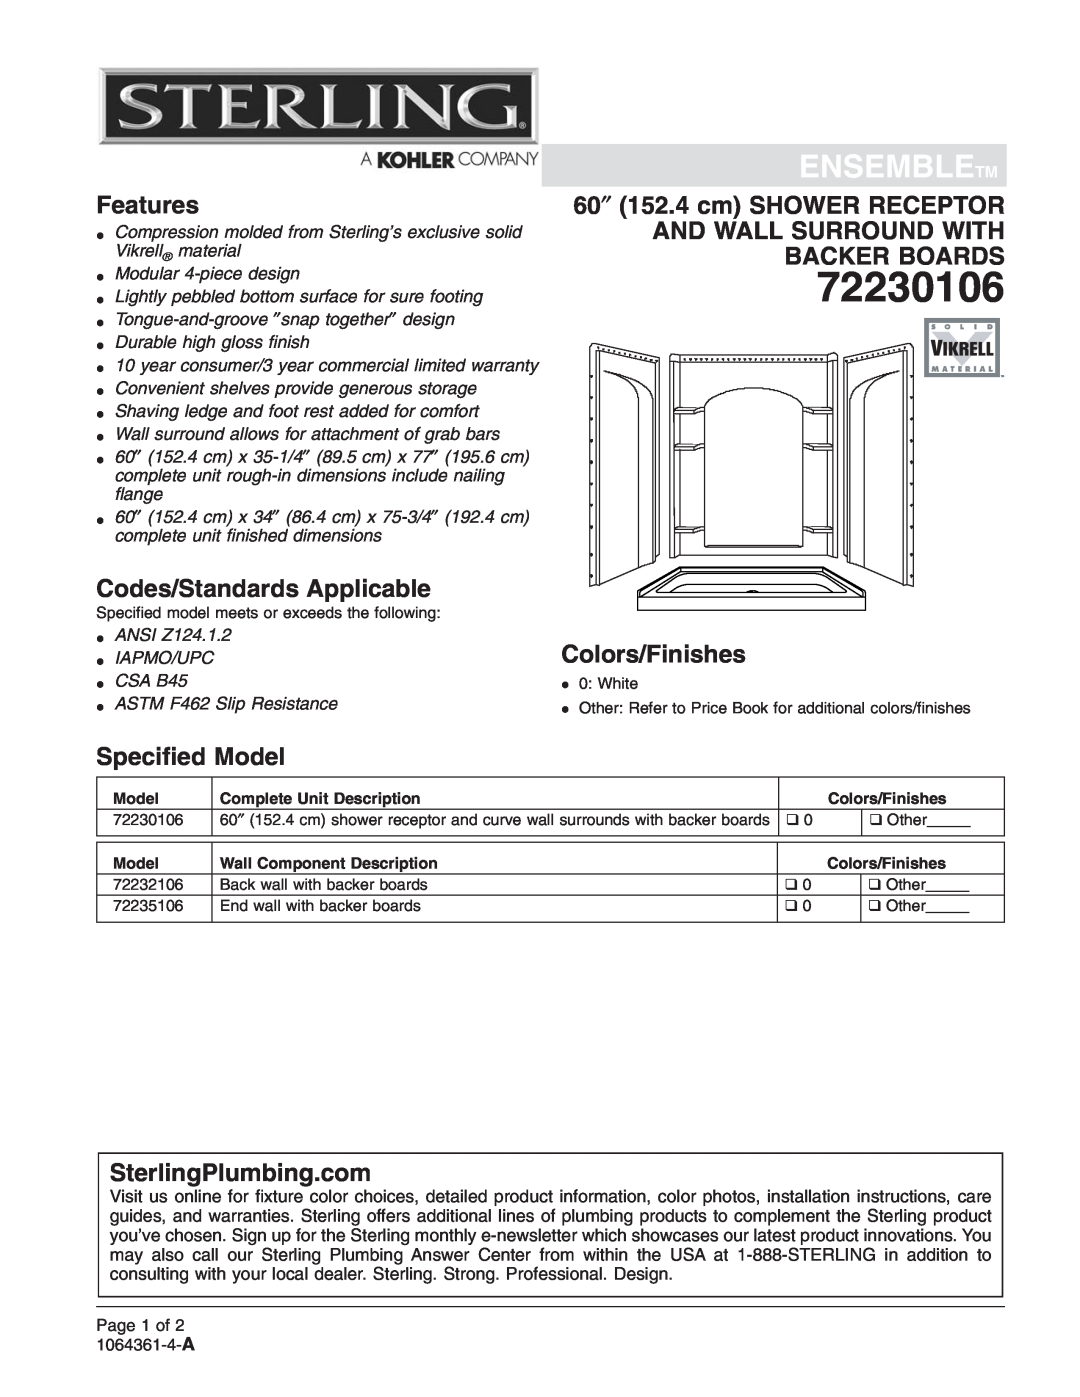 Sterling Plumbing 72230106 warranty Ensembletm, Features, Codes/Standards Applicable, 60″ 152.4 cm SHOWER RECEPTOR 